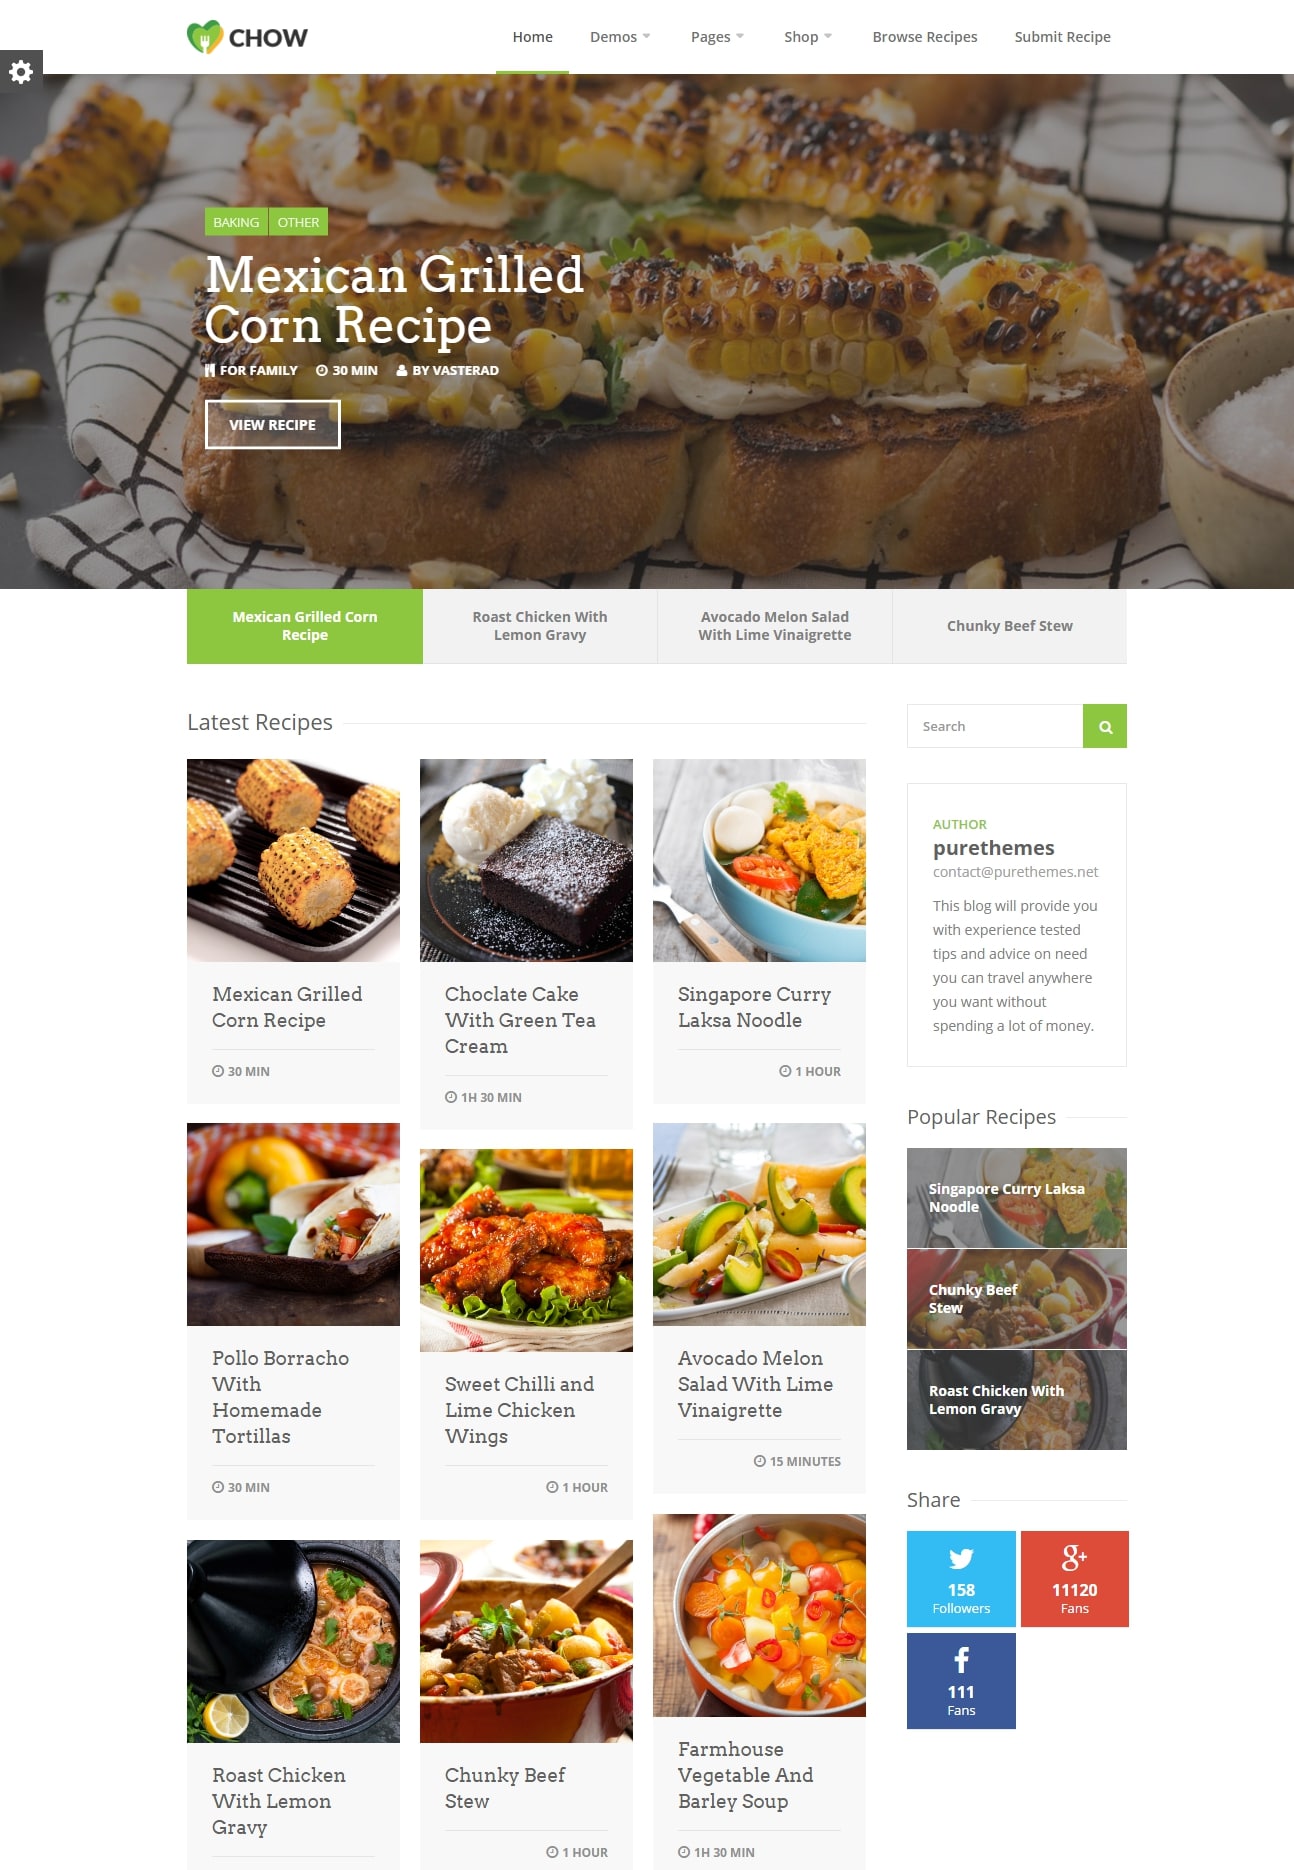 thiết kế website dạy nấu ăn